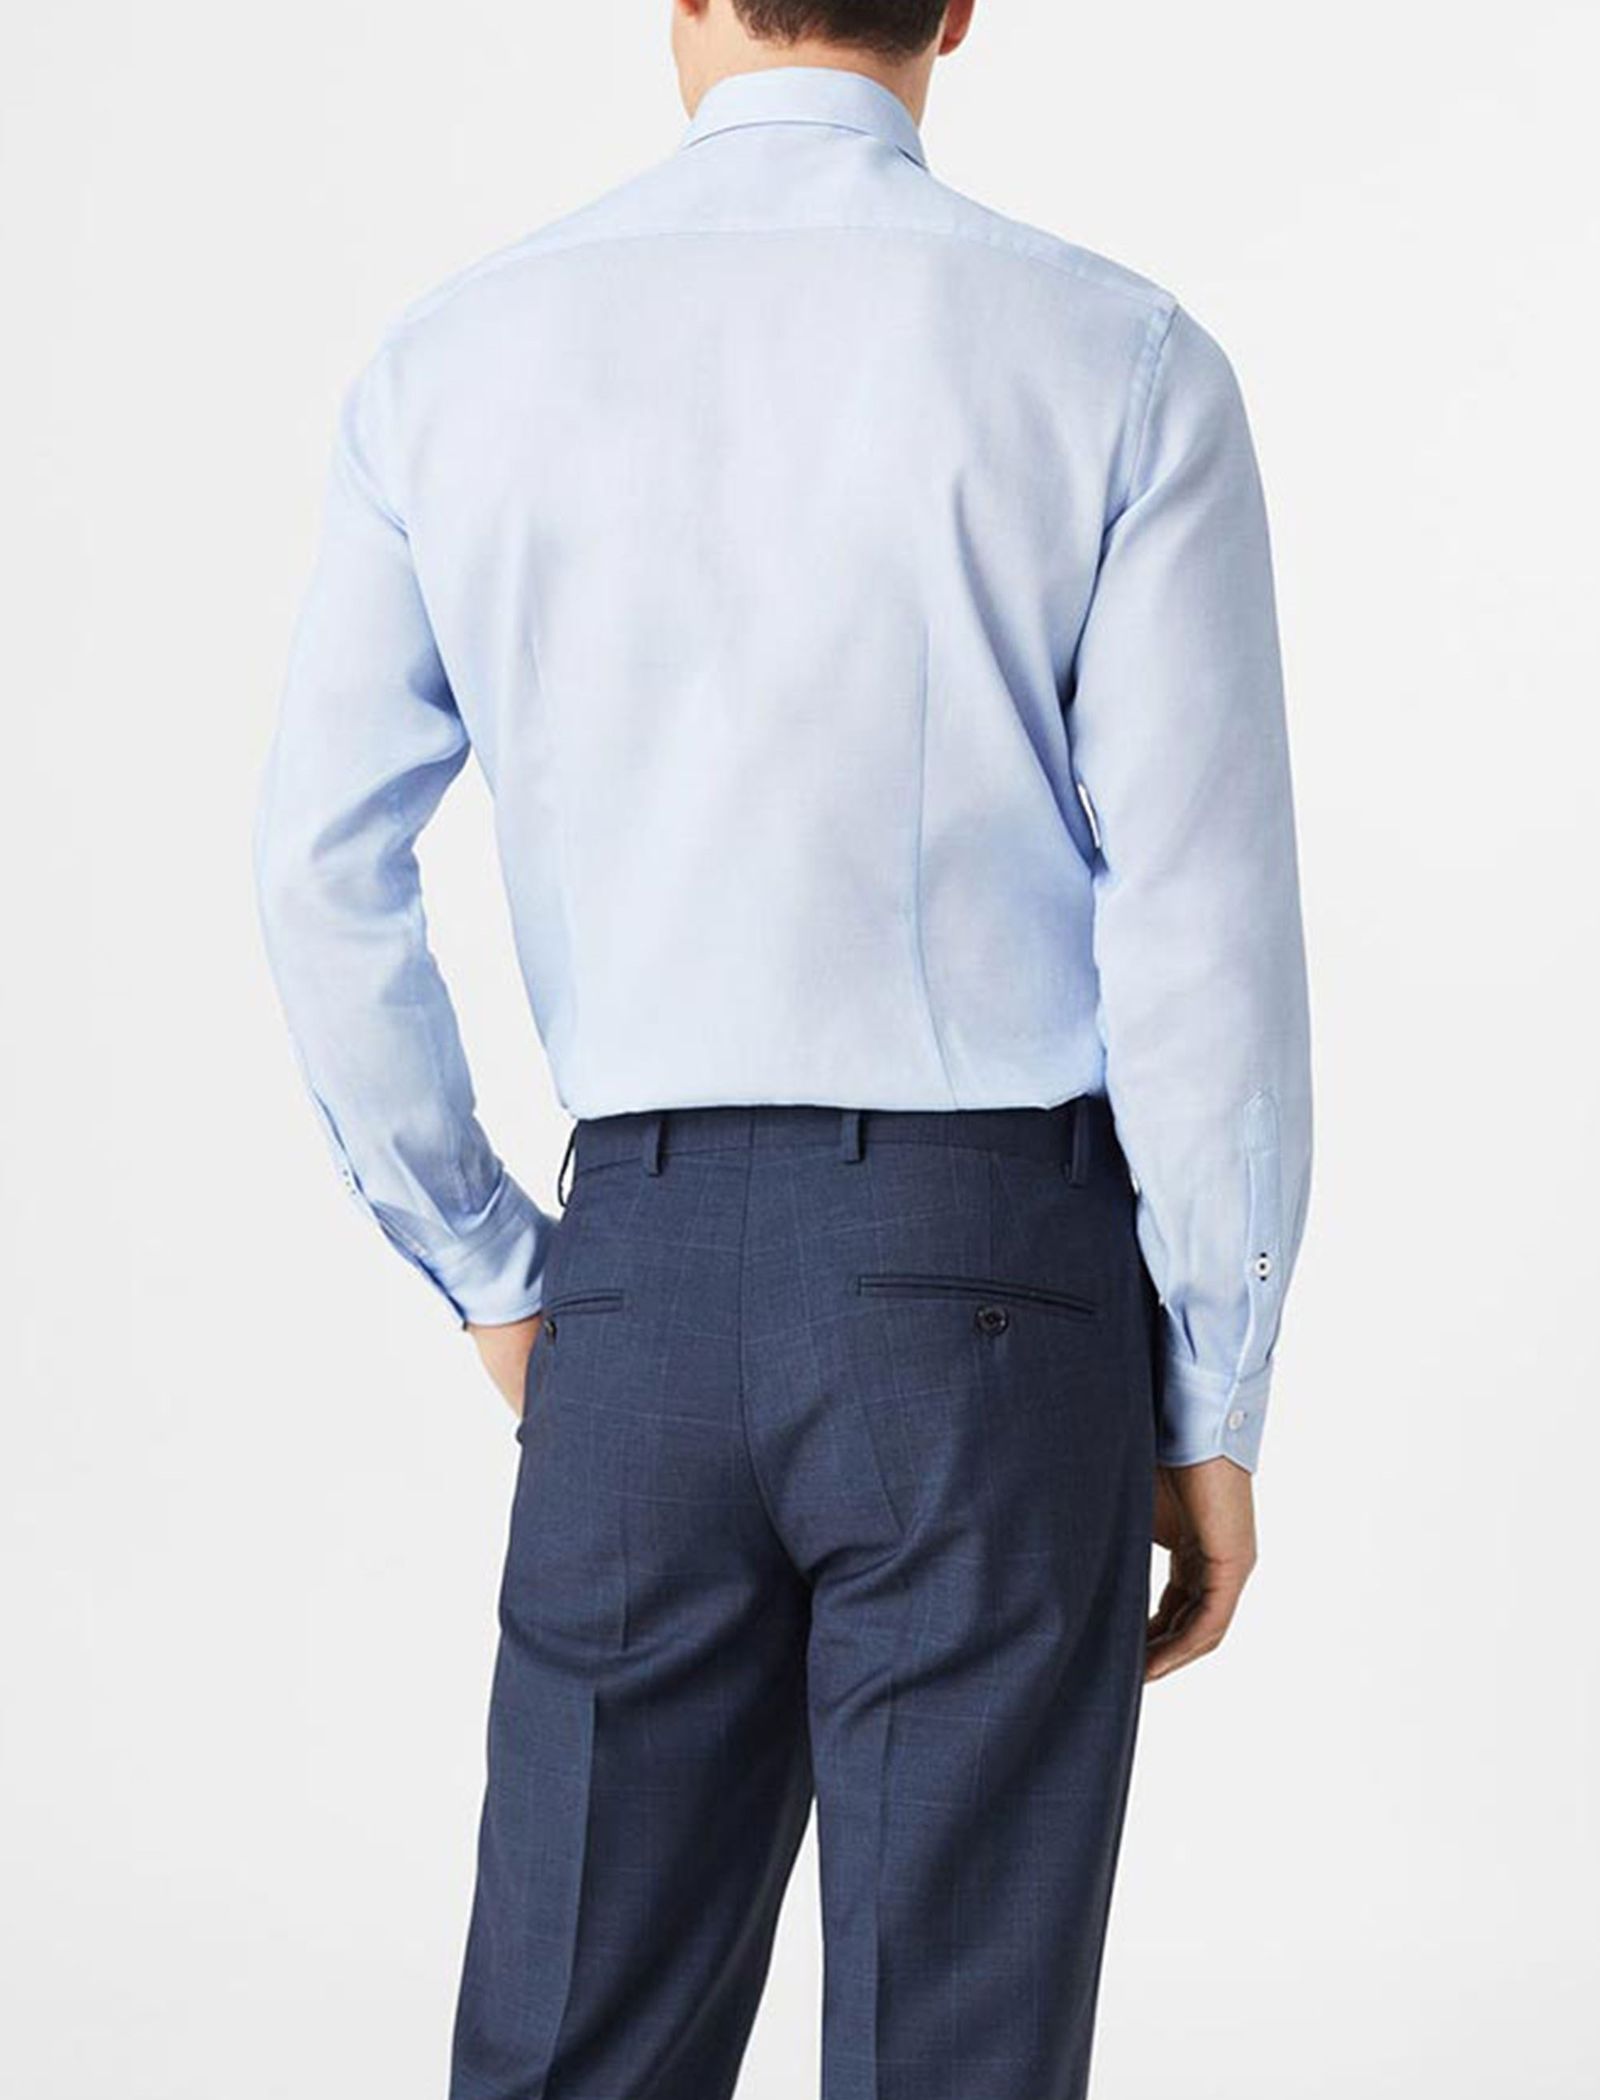 پیراهن رسمی مردانه - مانگو - آبي روشن - 3